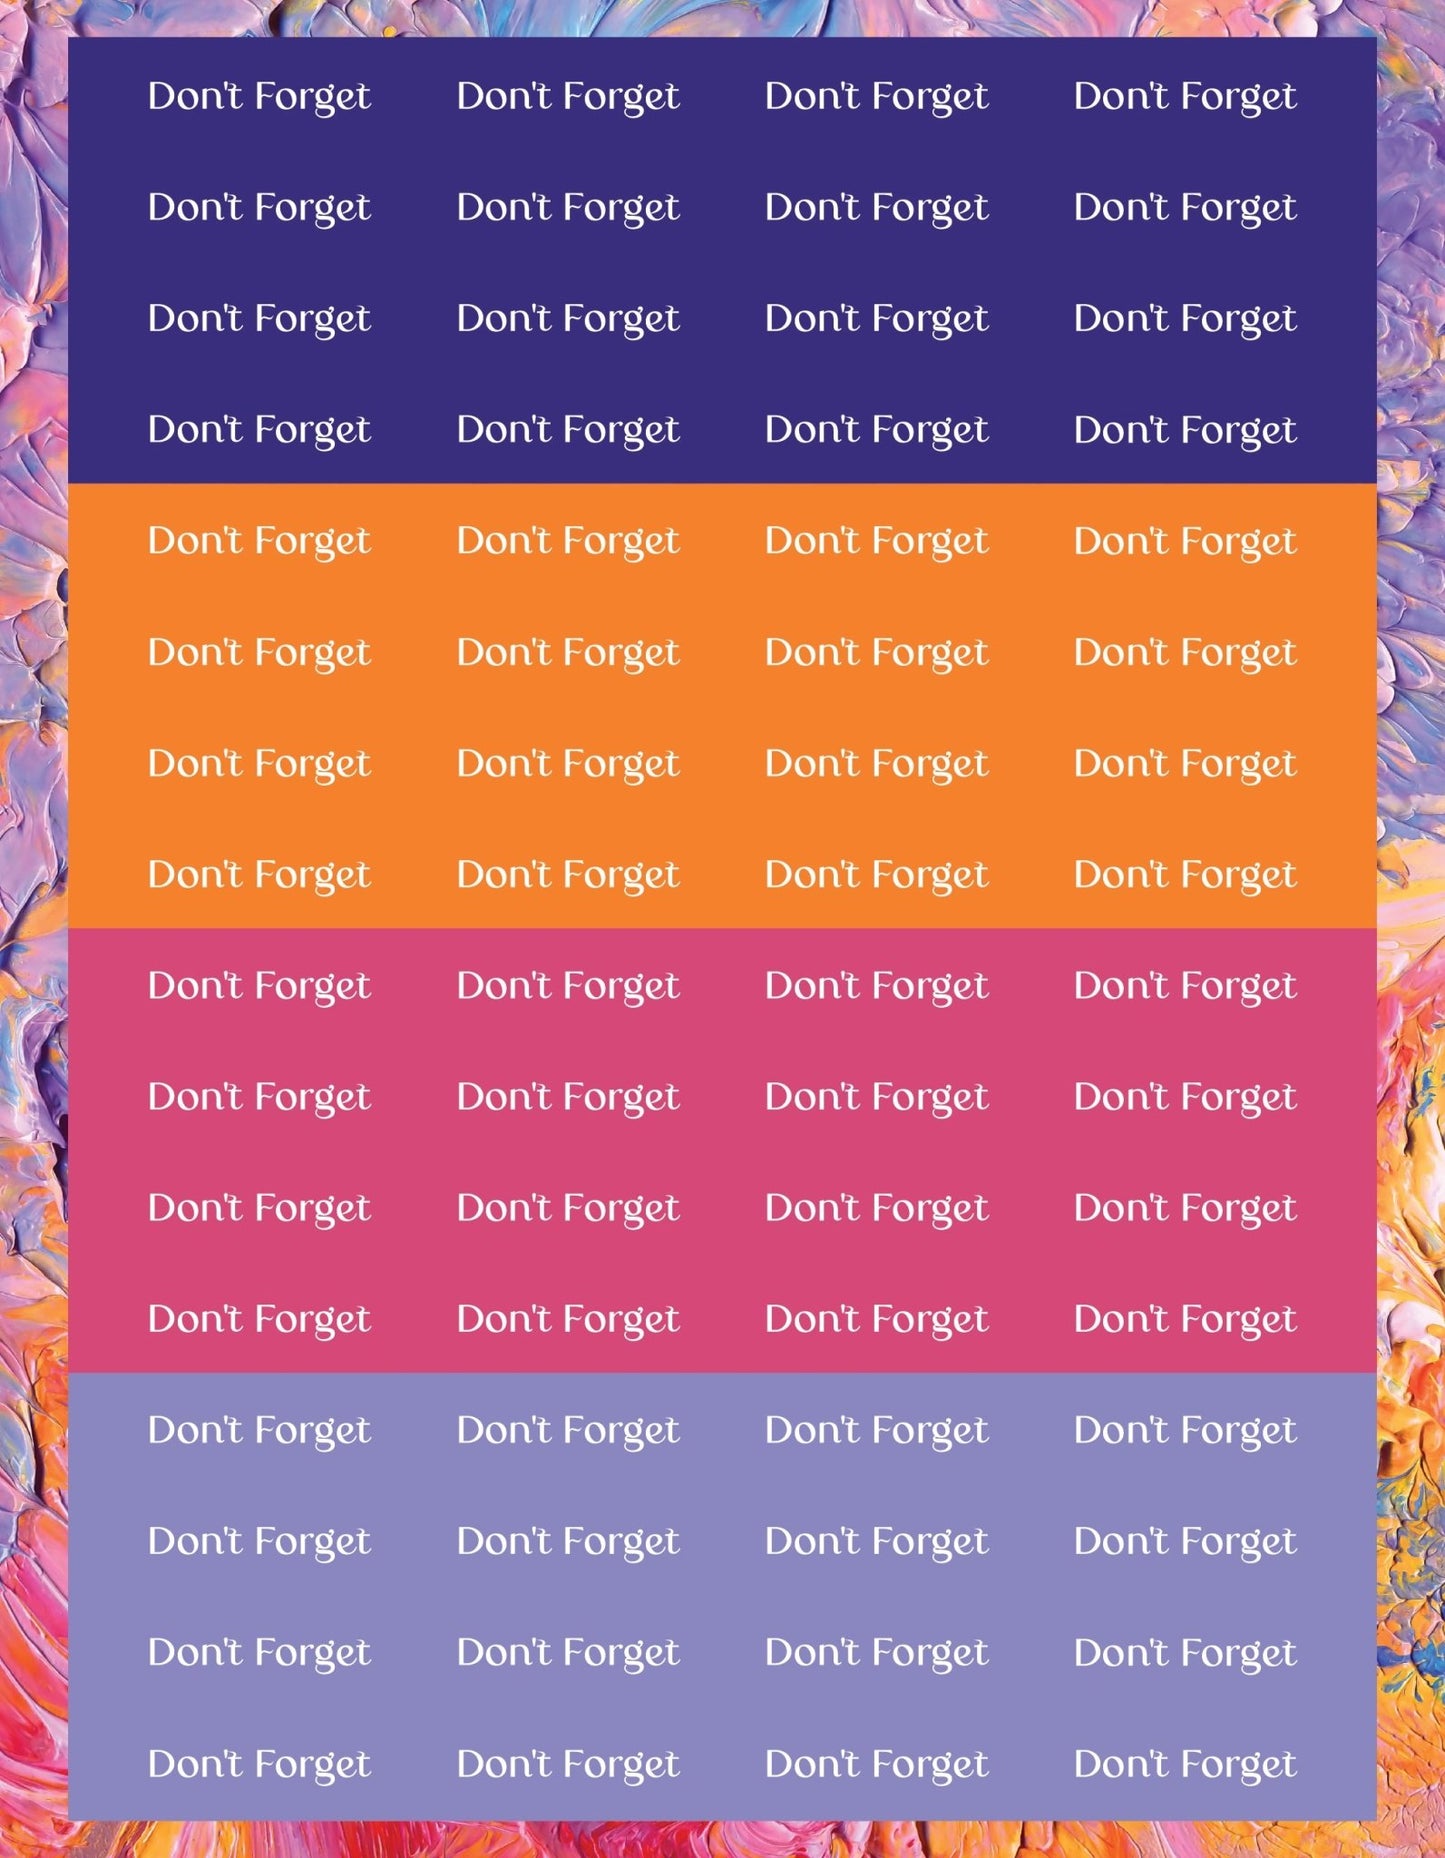 Don't Forget Sticker Sheets - 9 Designs/Colors - Colibri Paper Co